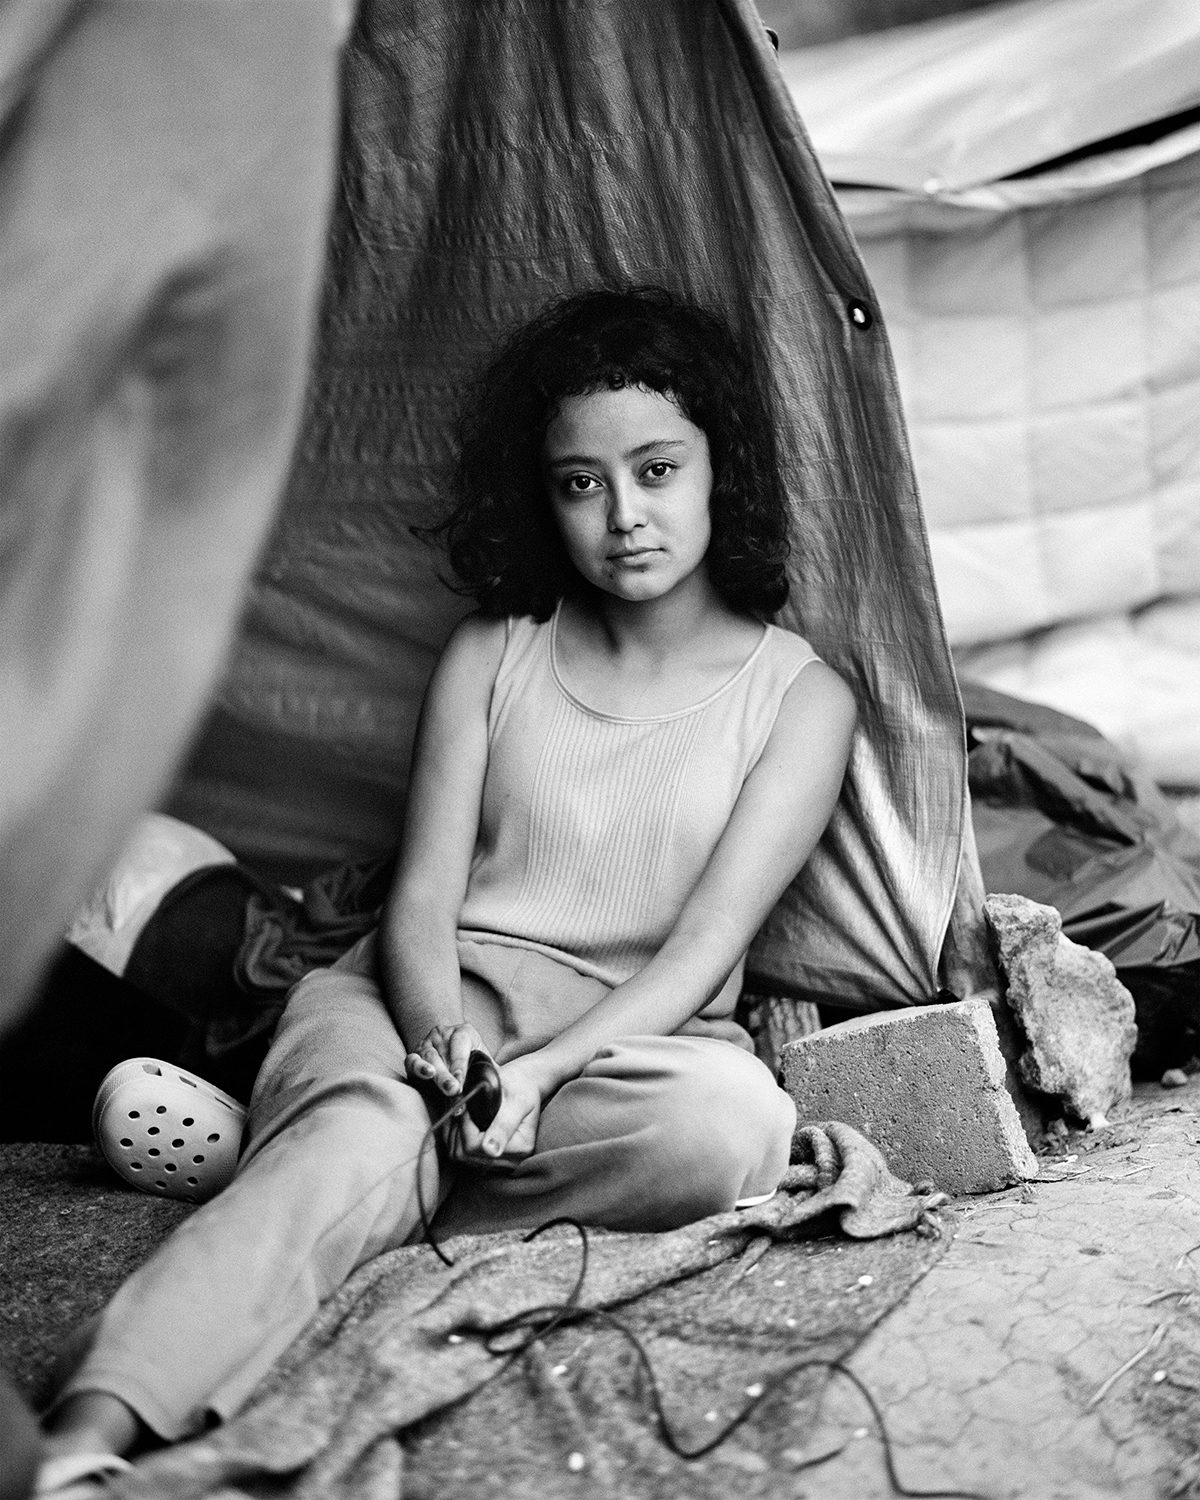 Self portrait in Adam Ferguson's Sony award winning series Migrantes